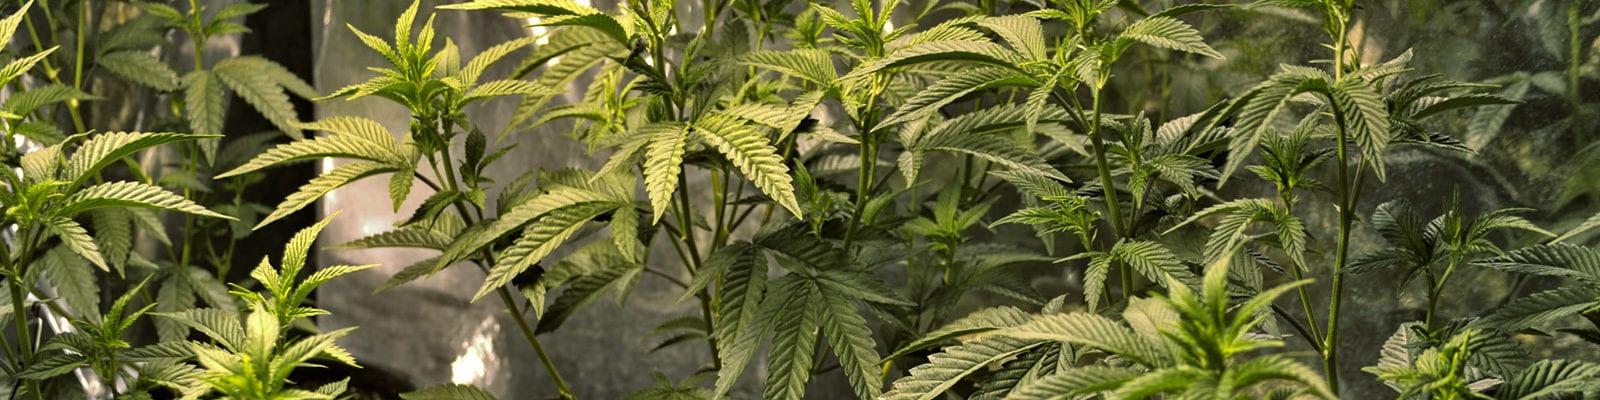 Photograph of an indoor cannabis grow in Colorado.